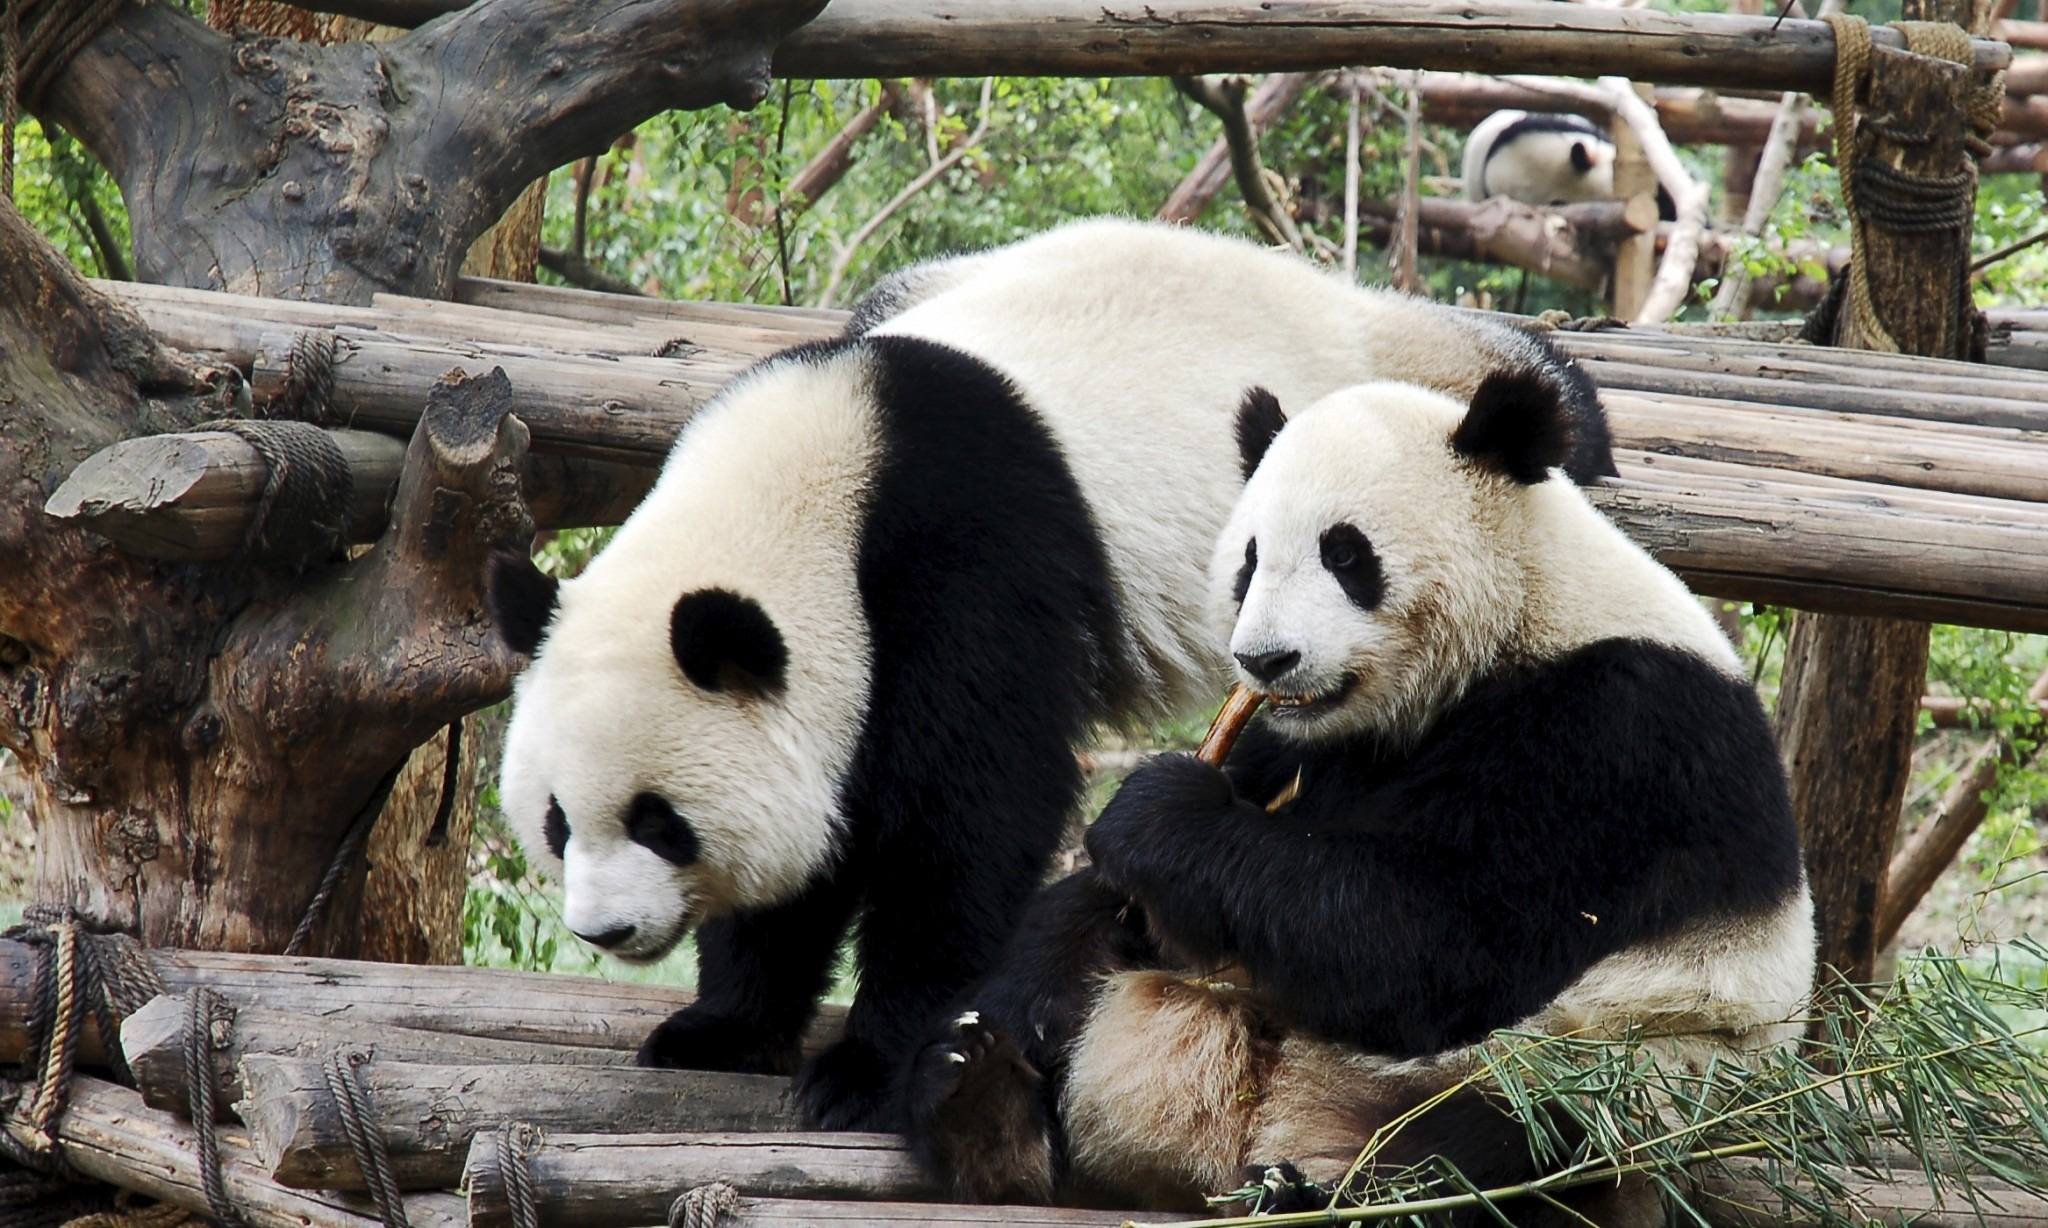 Weekly Economic News Roundup and giant pandas